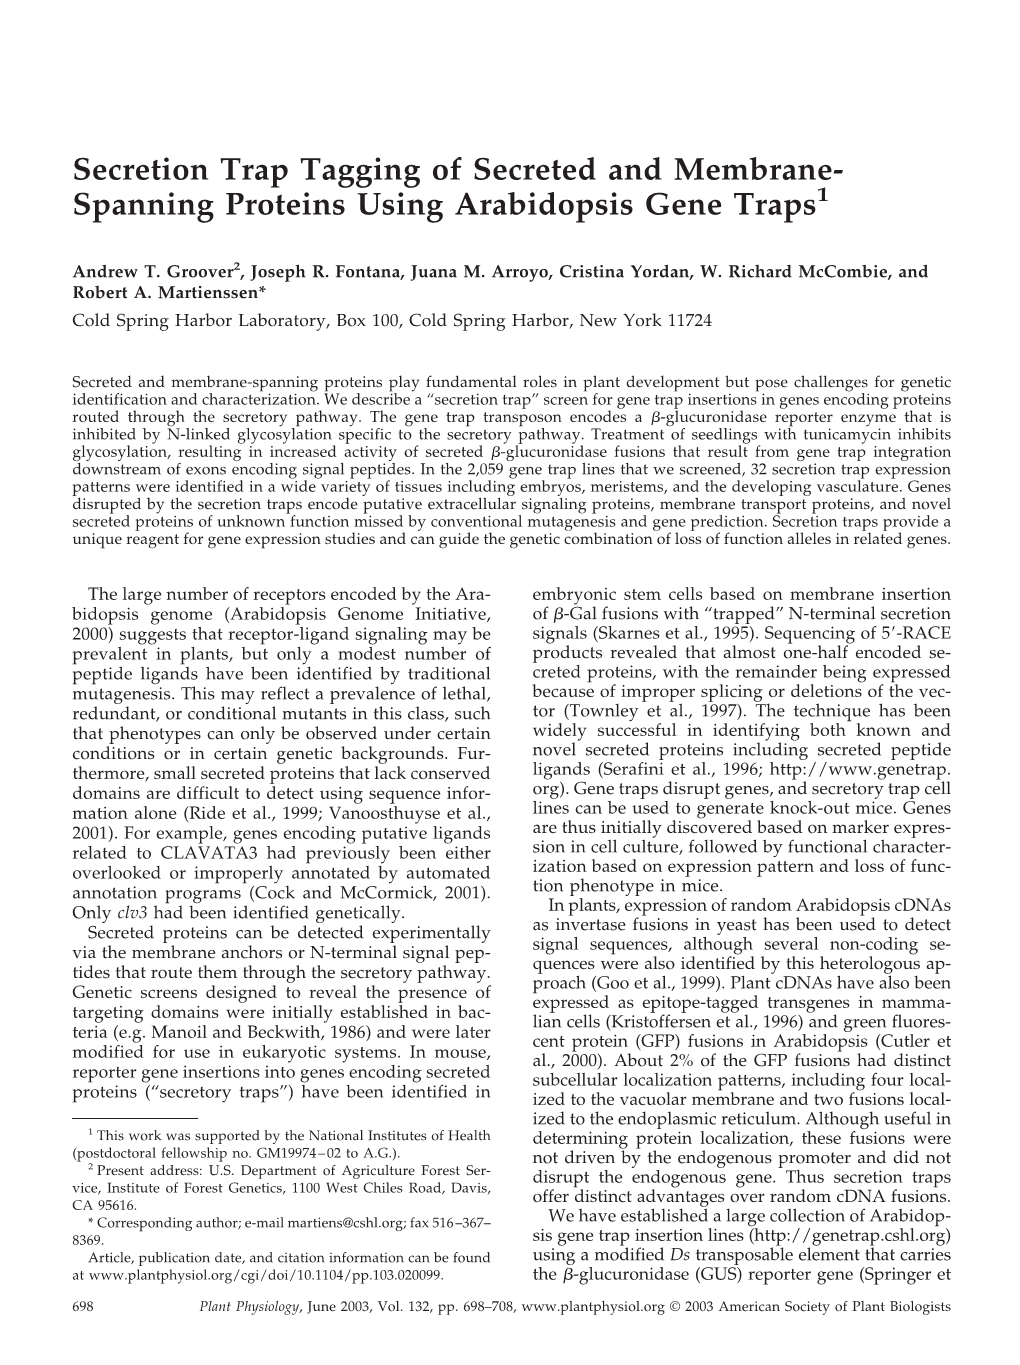 Spanning Proteins Using Arabidopsis Gene Traps1